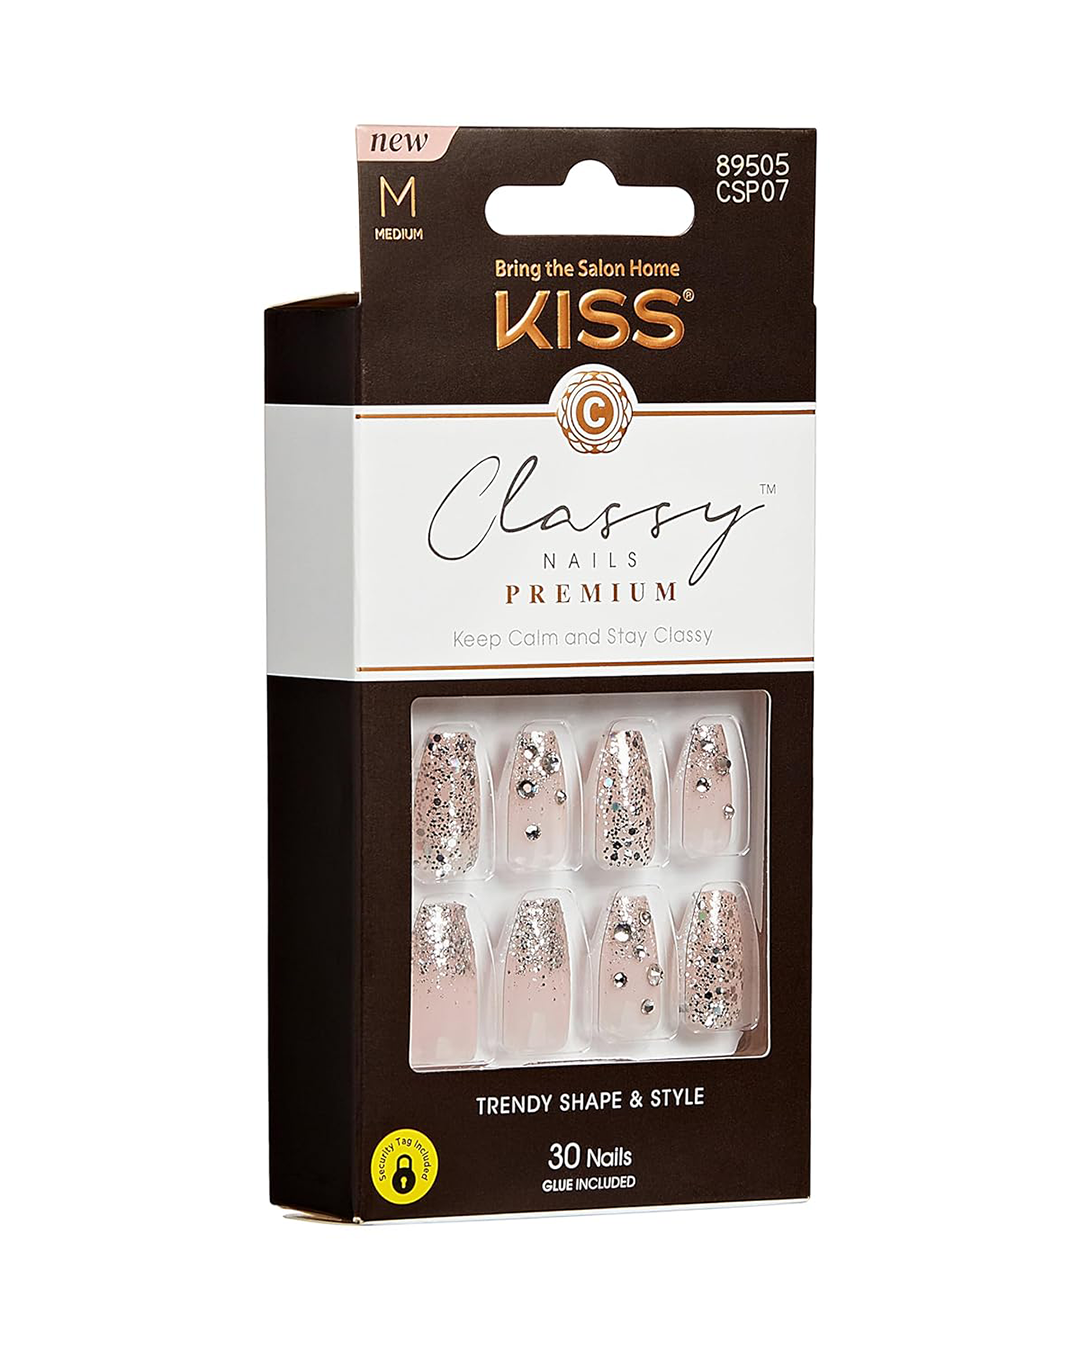 Kiss Classy Nails (CSP07)